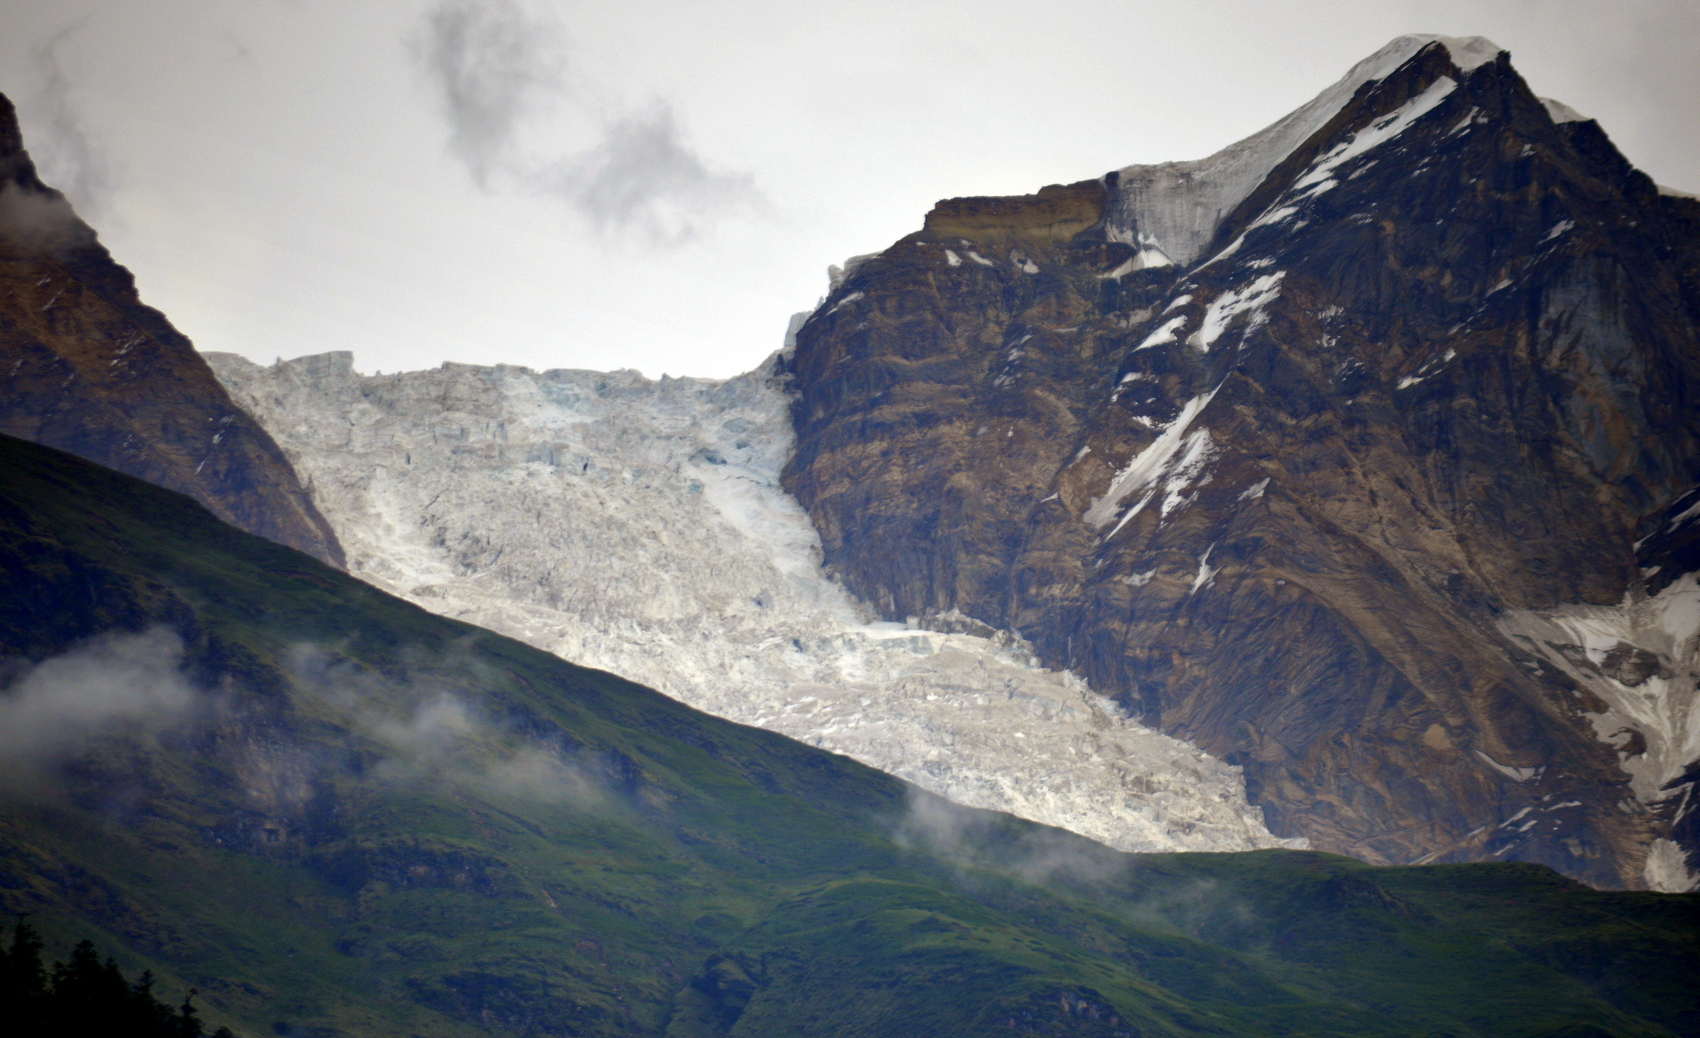 Dhaulagiri Icefall above the Kali Gandaki Valley